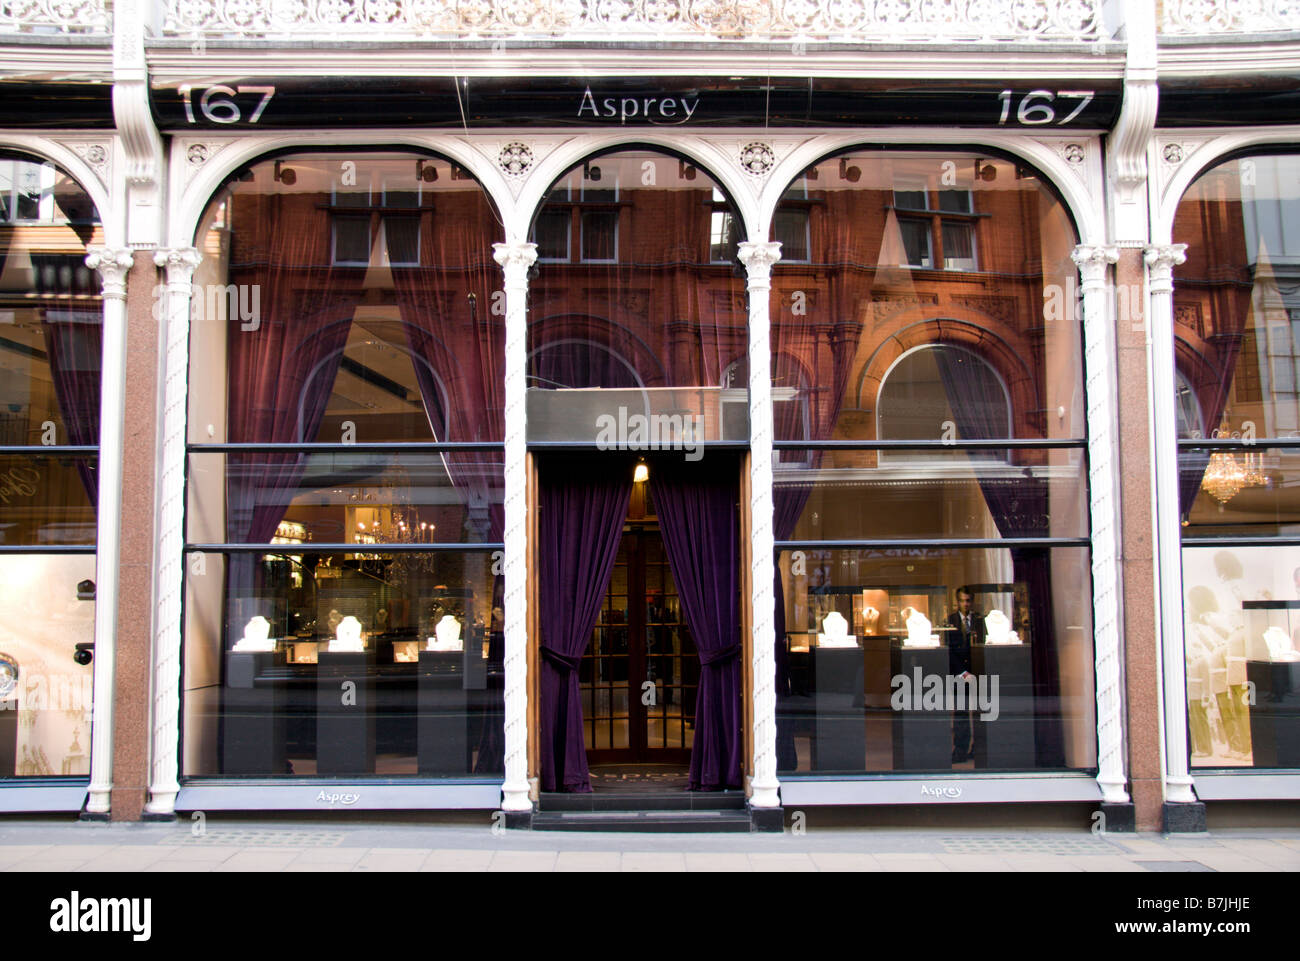 The shop front of the Asprey Jewellry store on New Bond Street, London. Jan 2009 Stock Photo